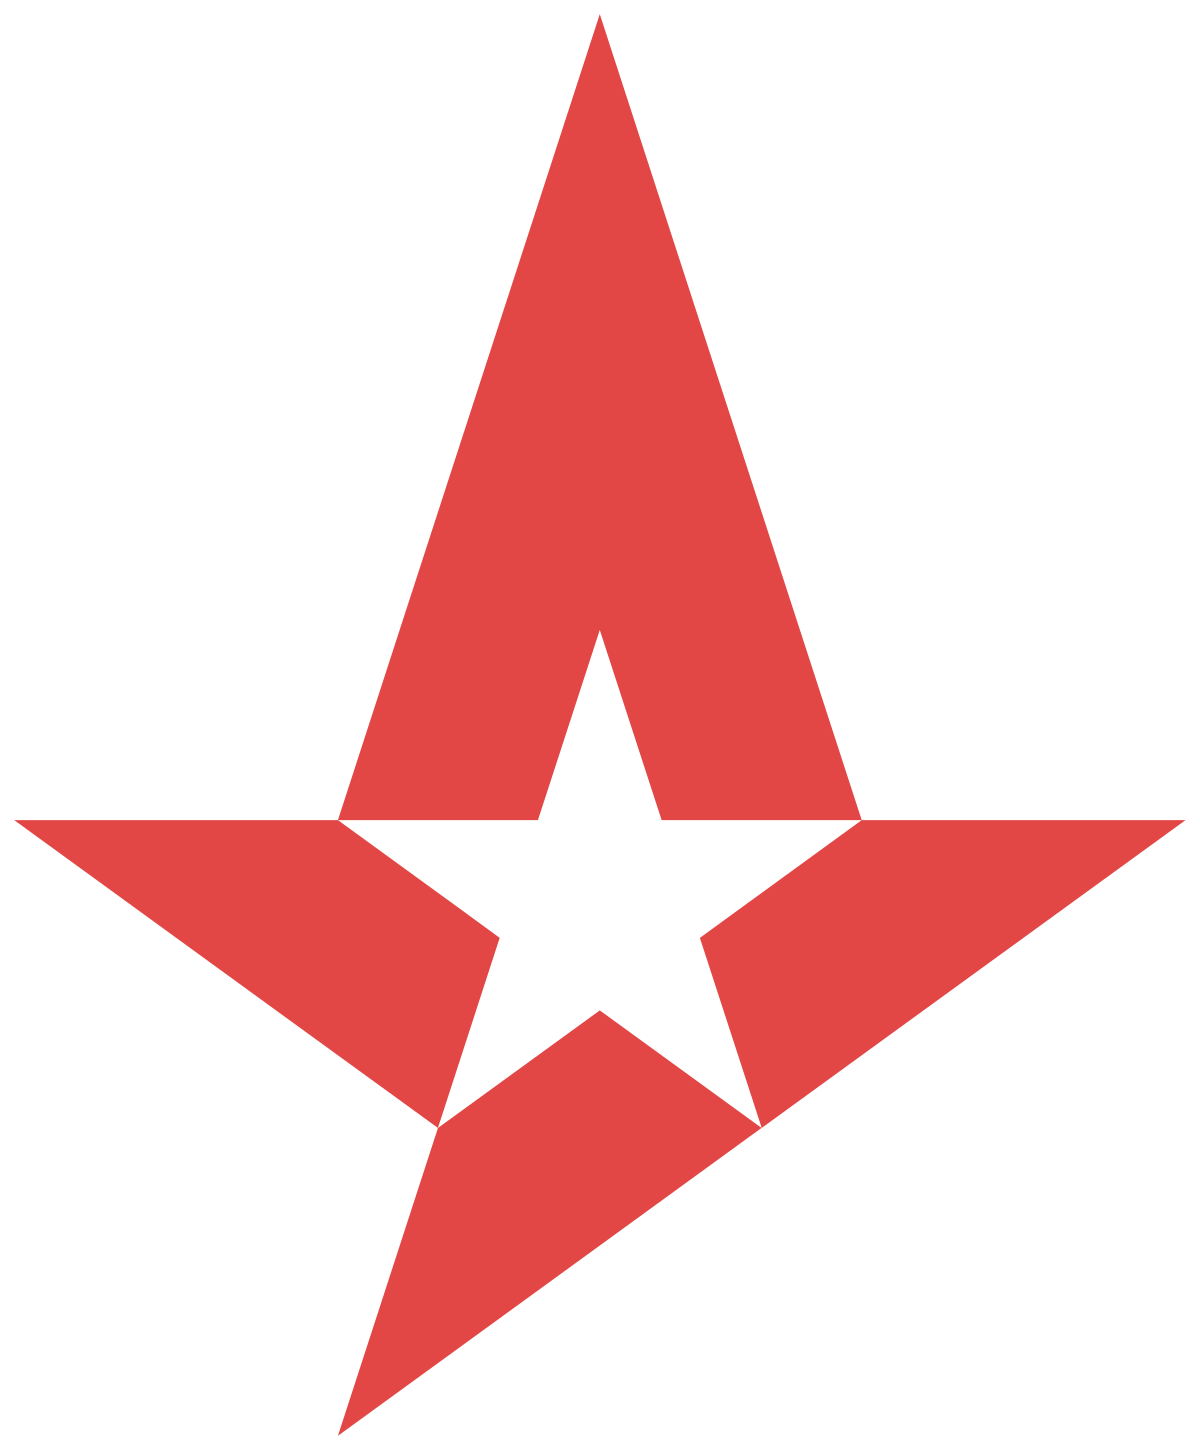 Astralis's logo